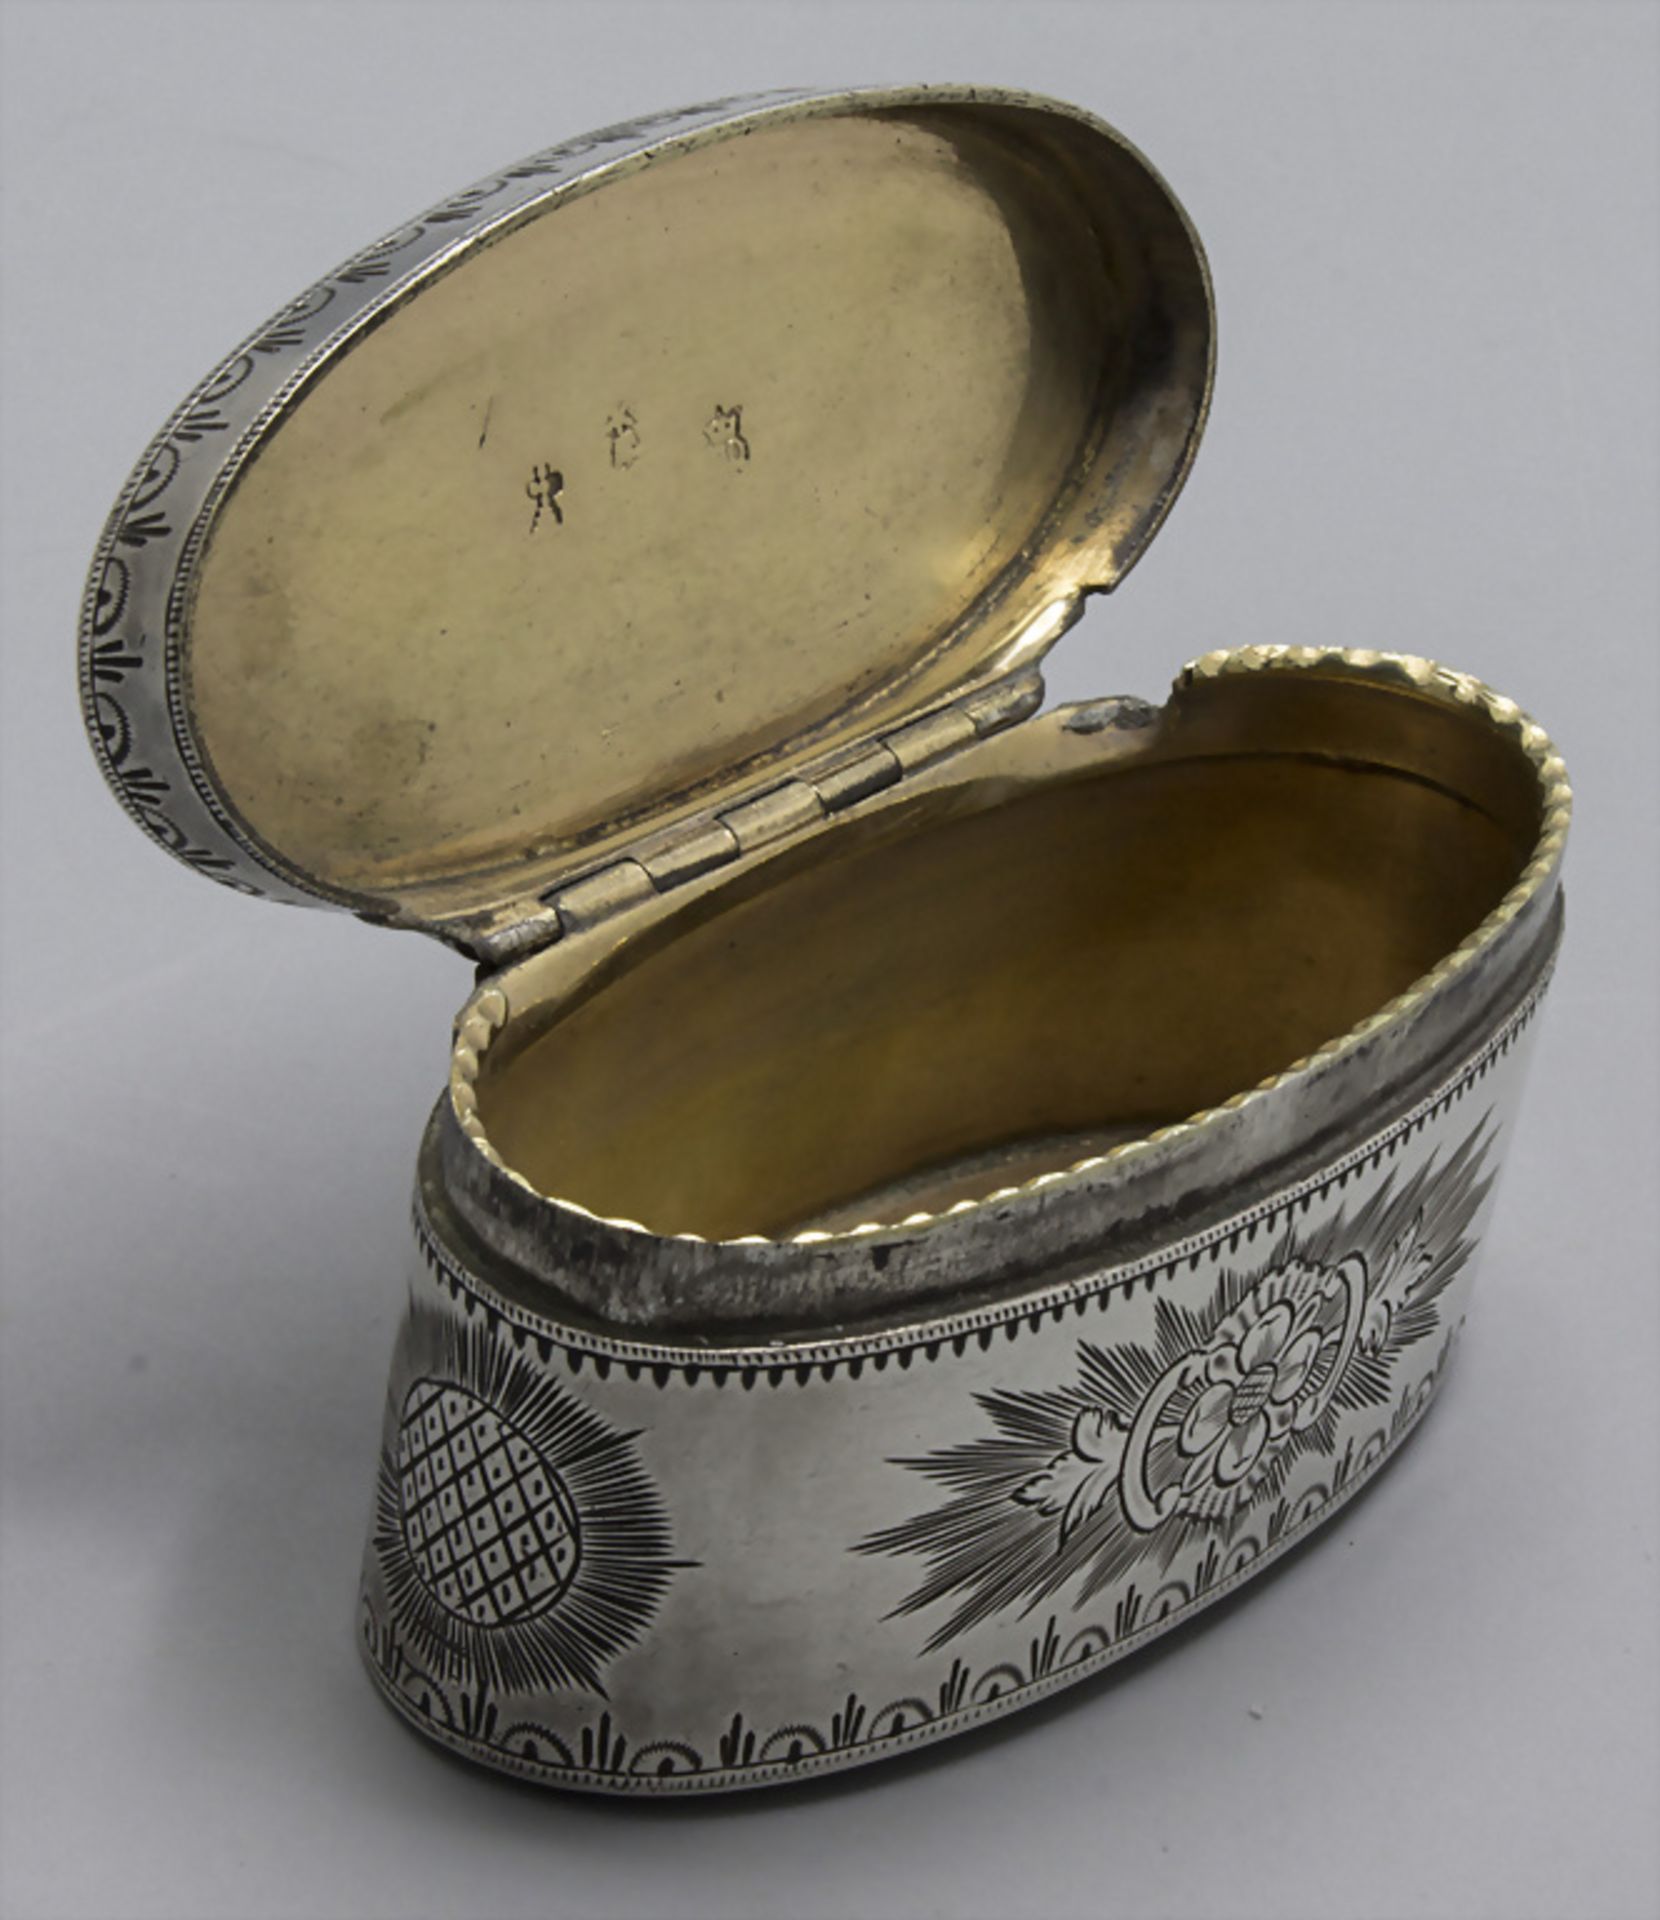 Tabatiere / Boite en argent massif / A silver snuff box, Ath, 1778 - Image 3 of 7